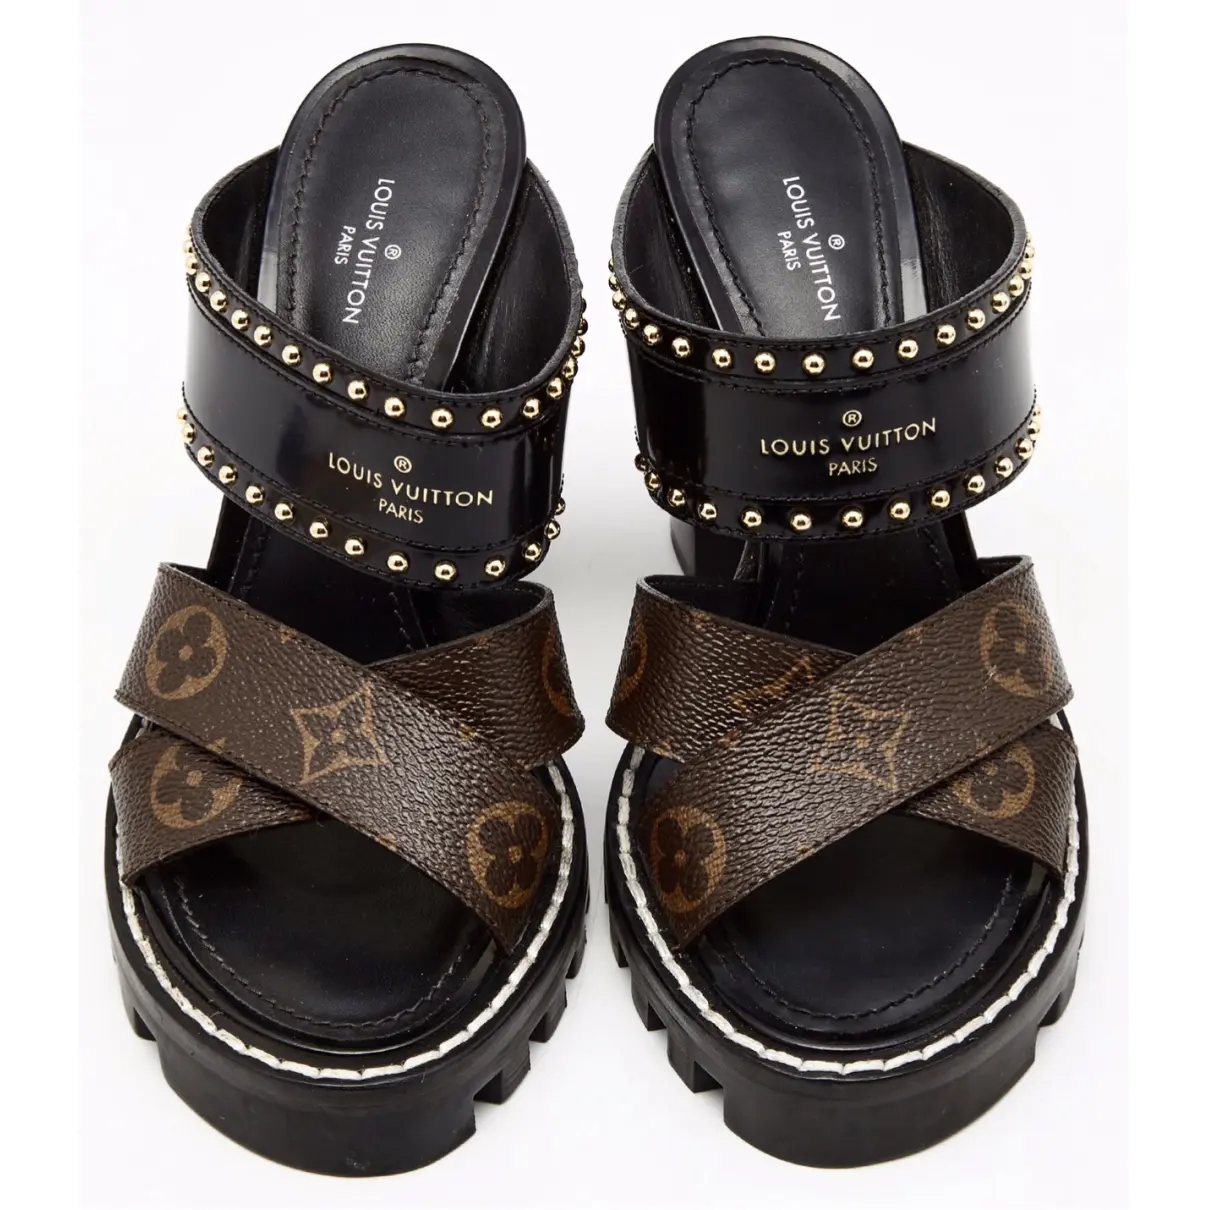 Buy Louis Vuitton Star trail leather sandals online